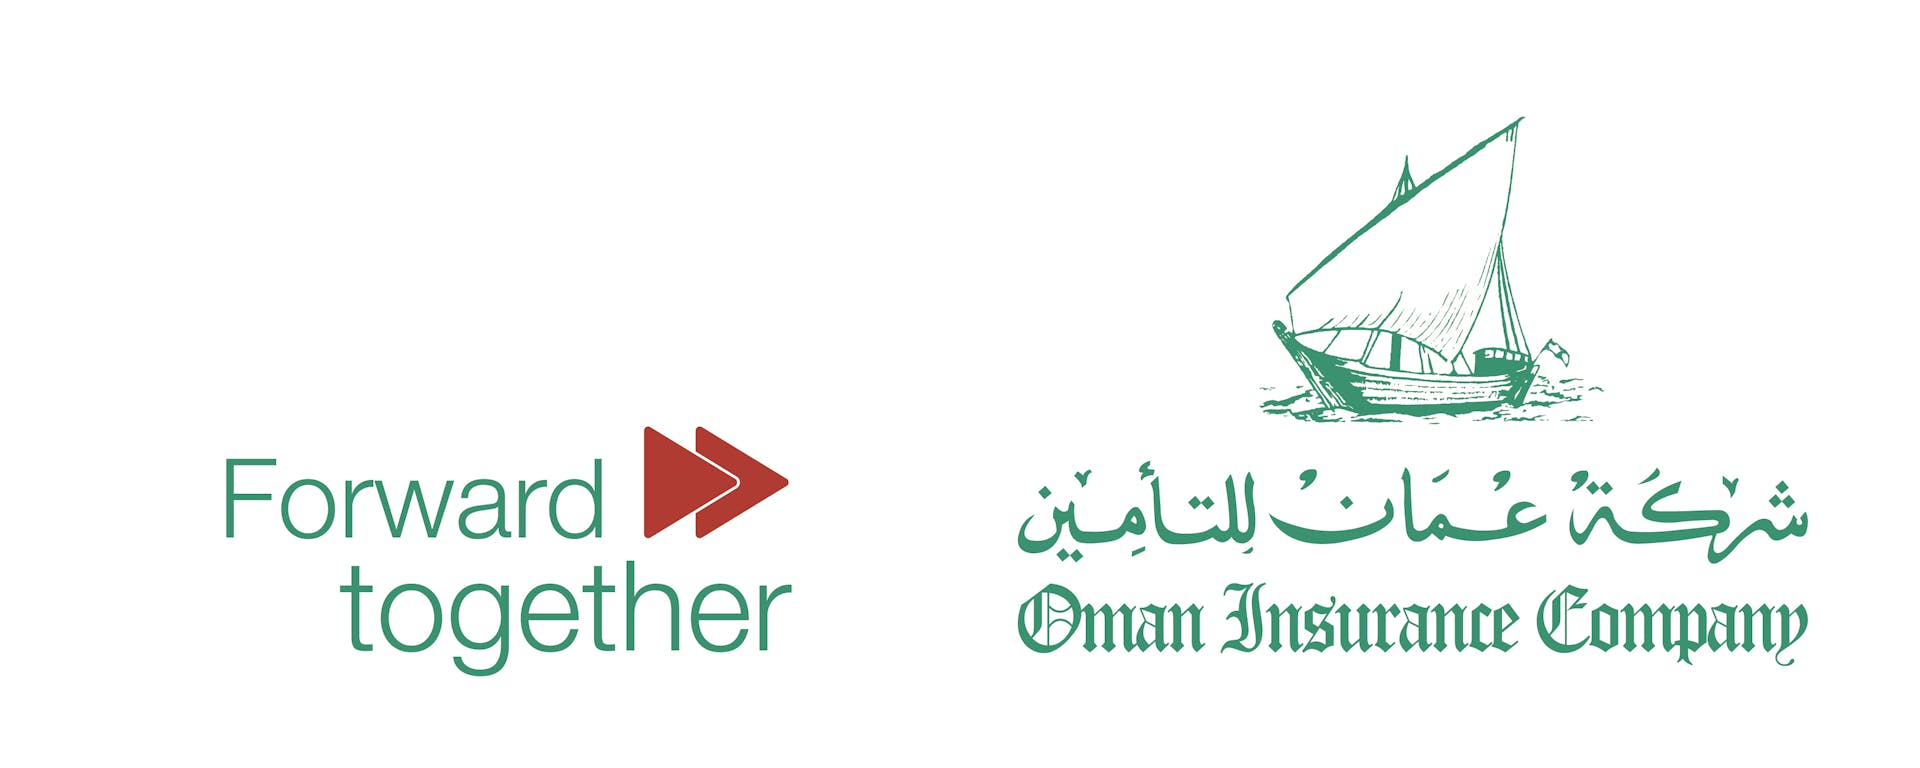 Forward together - Oman Insurance Company